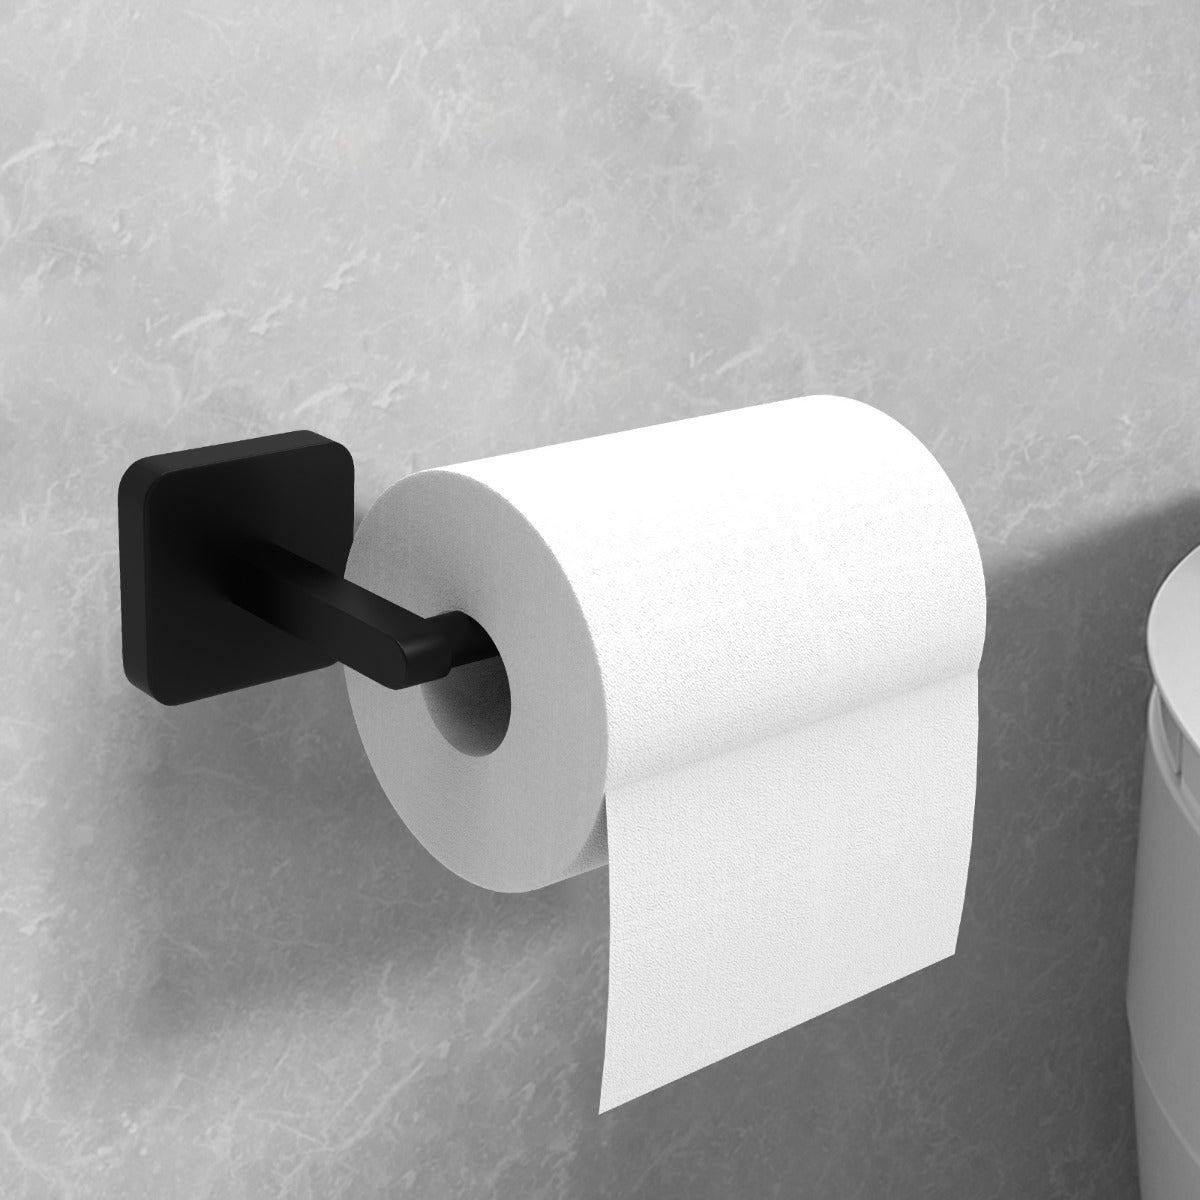 JassferryJASSFERRY 143mm Black Wall Mounted Toilet Paper Holder Tissue Holder RustproofToilet Paper Holders